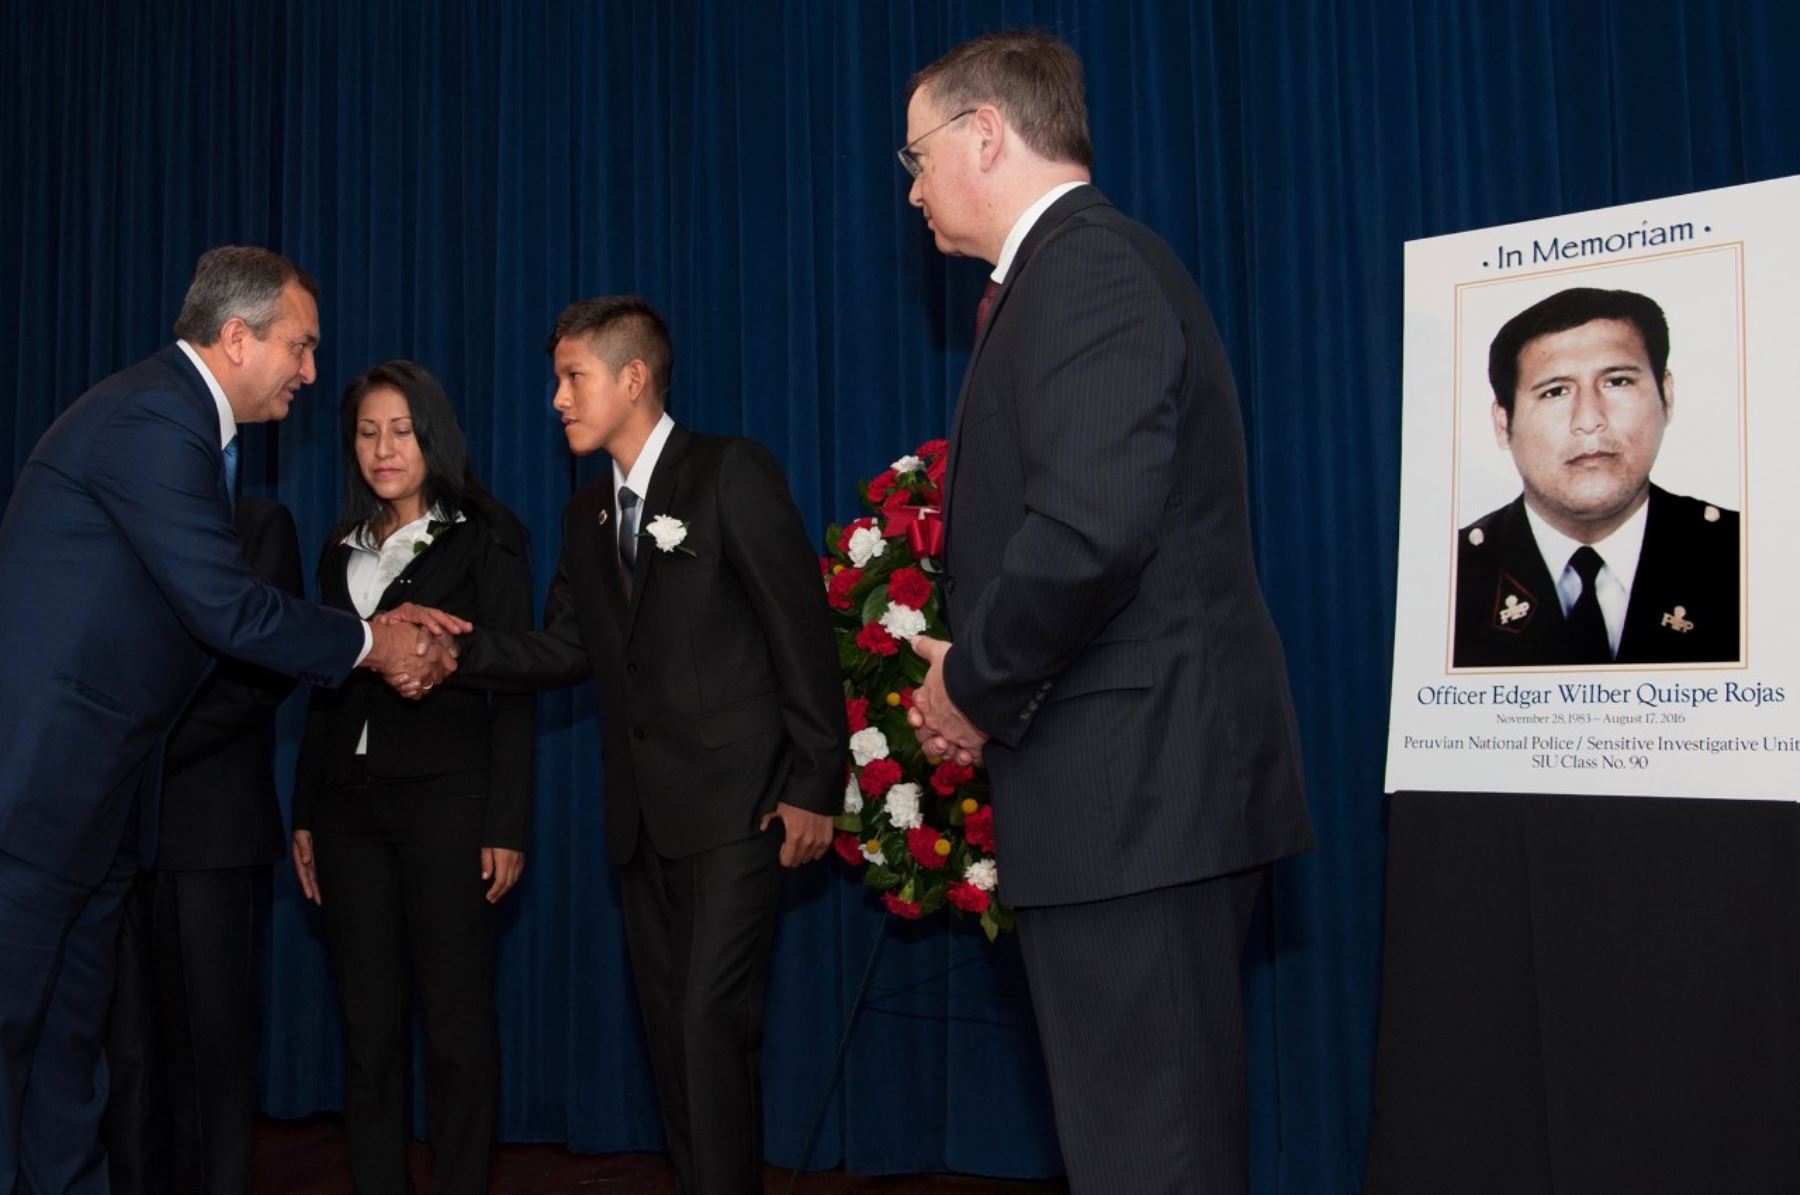 Peru National Police hero awarded posthumous U.S. Purple Heart